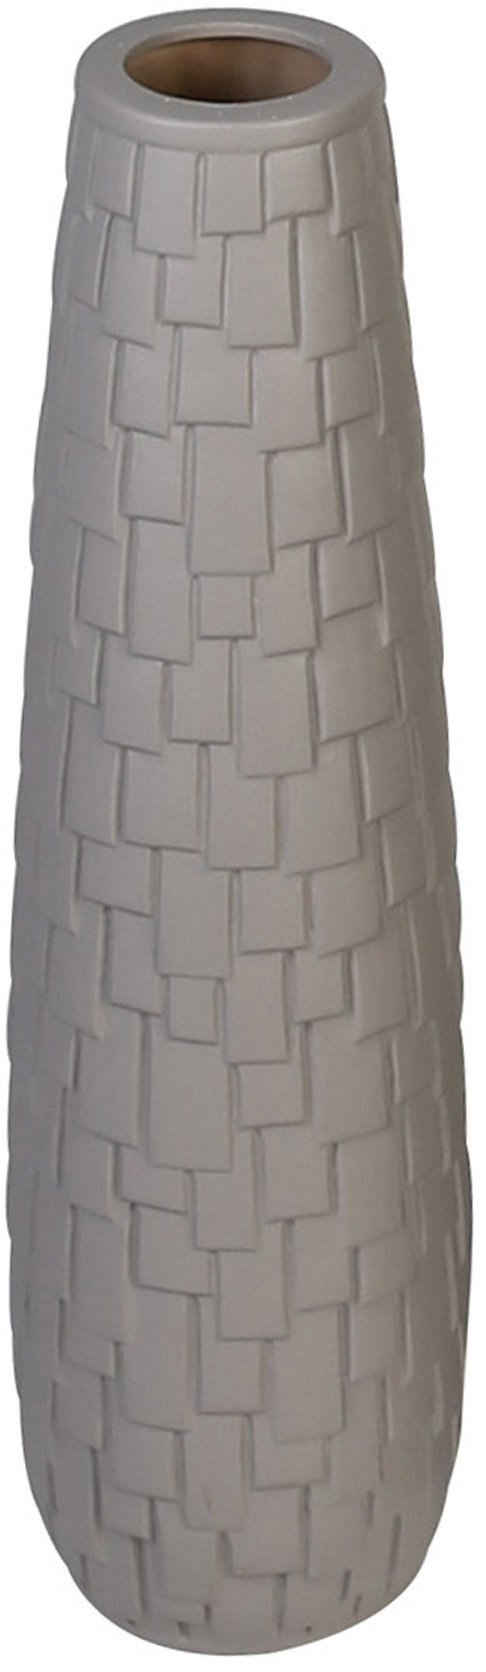 GILDE Bodenvase Brick (1 St), Keramik, matt, dekorative Riemchen-Struktur, 57 cm hoch